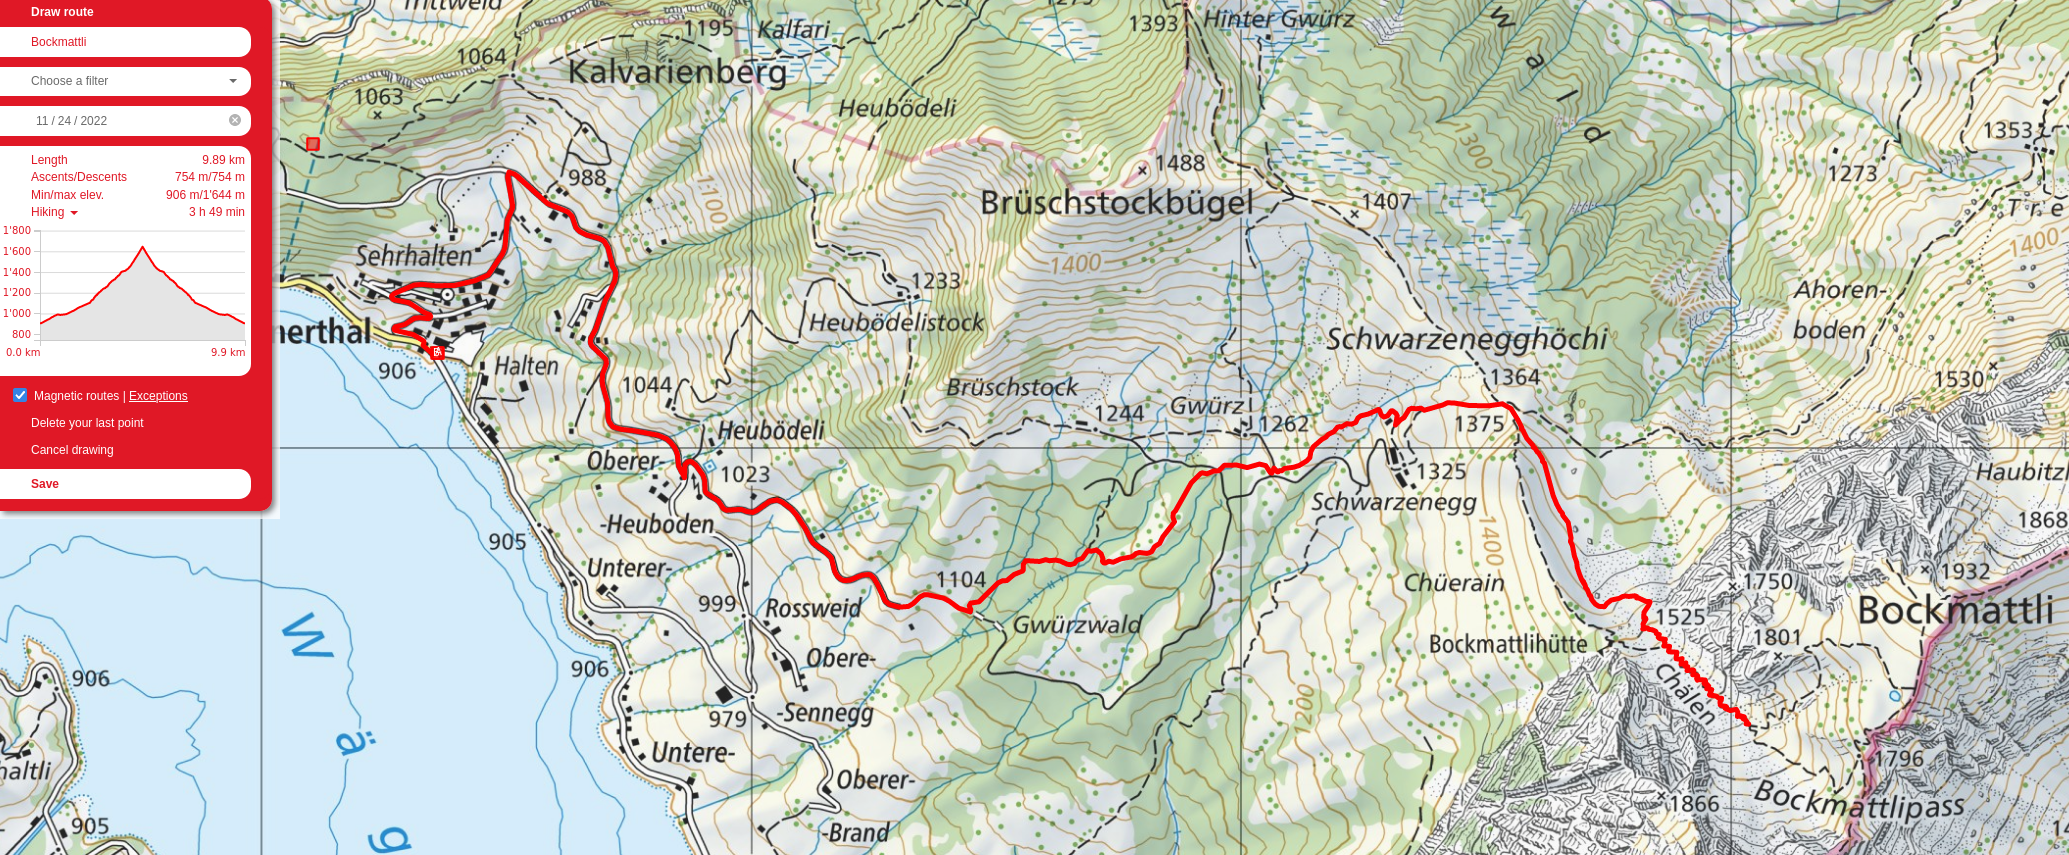 Bockmattli route map